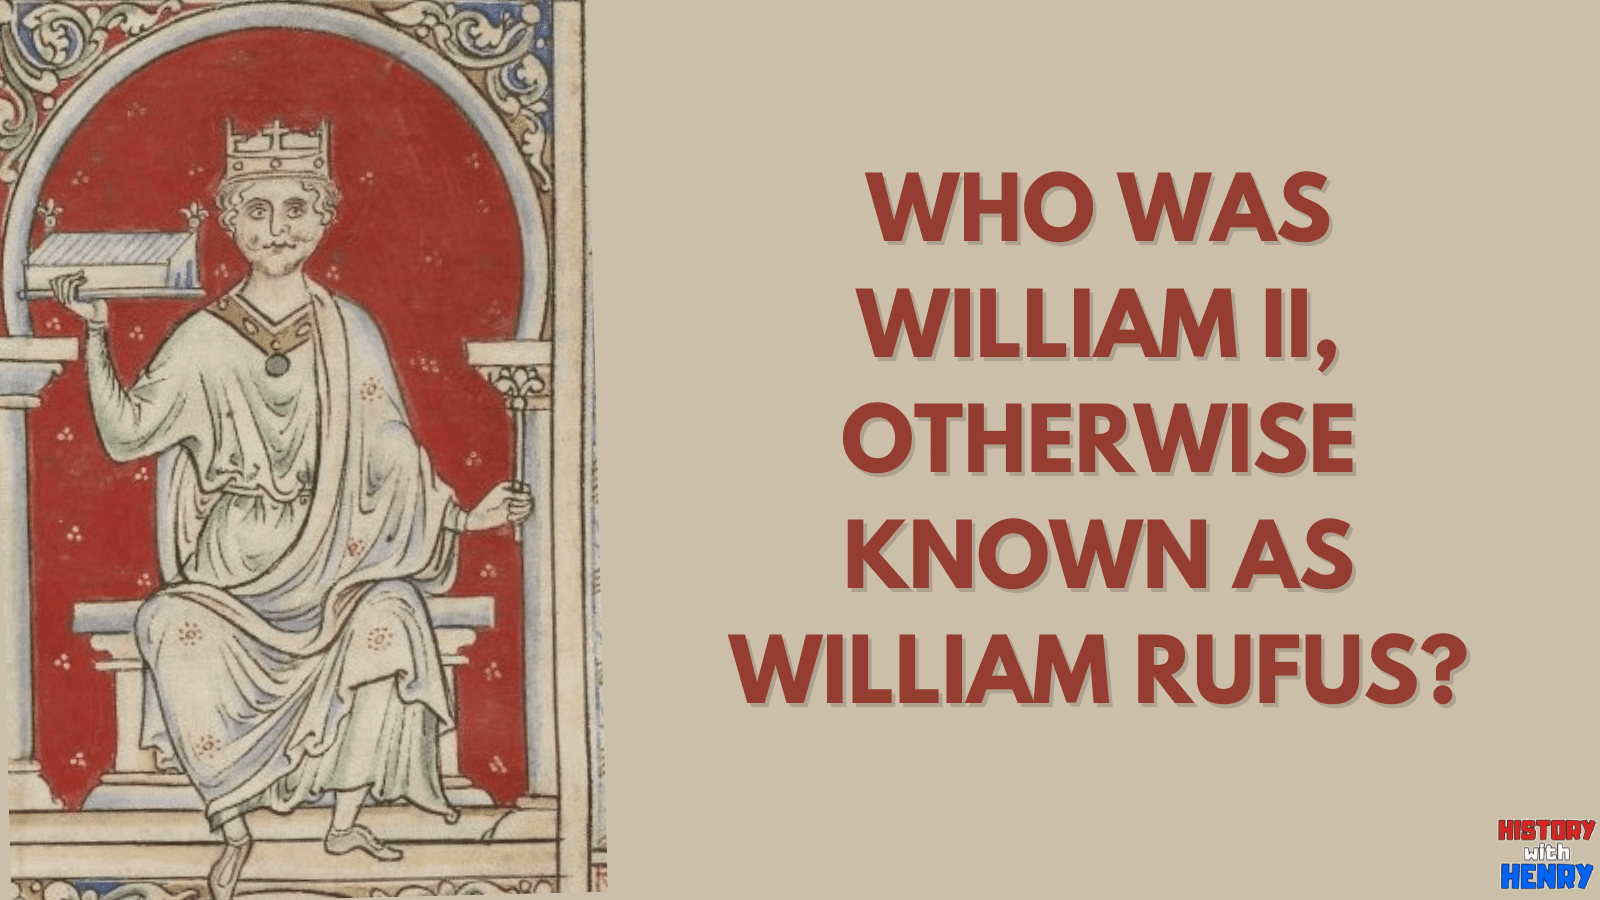 The murder of William Rufus